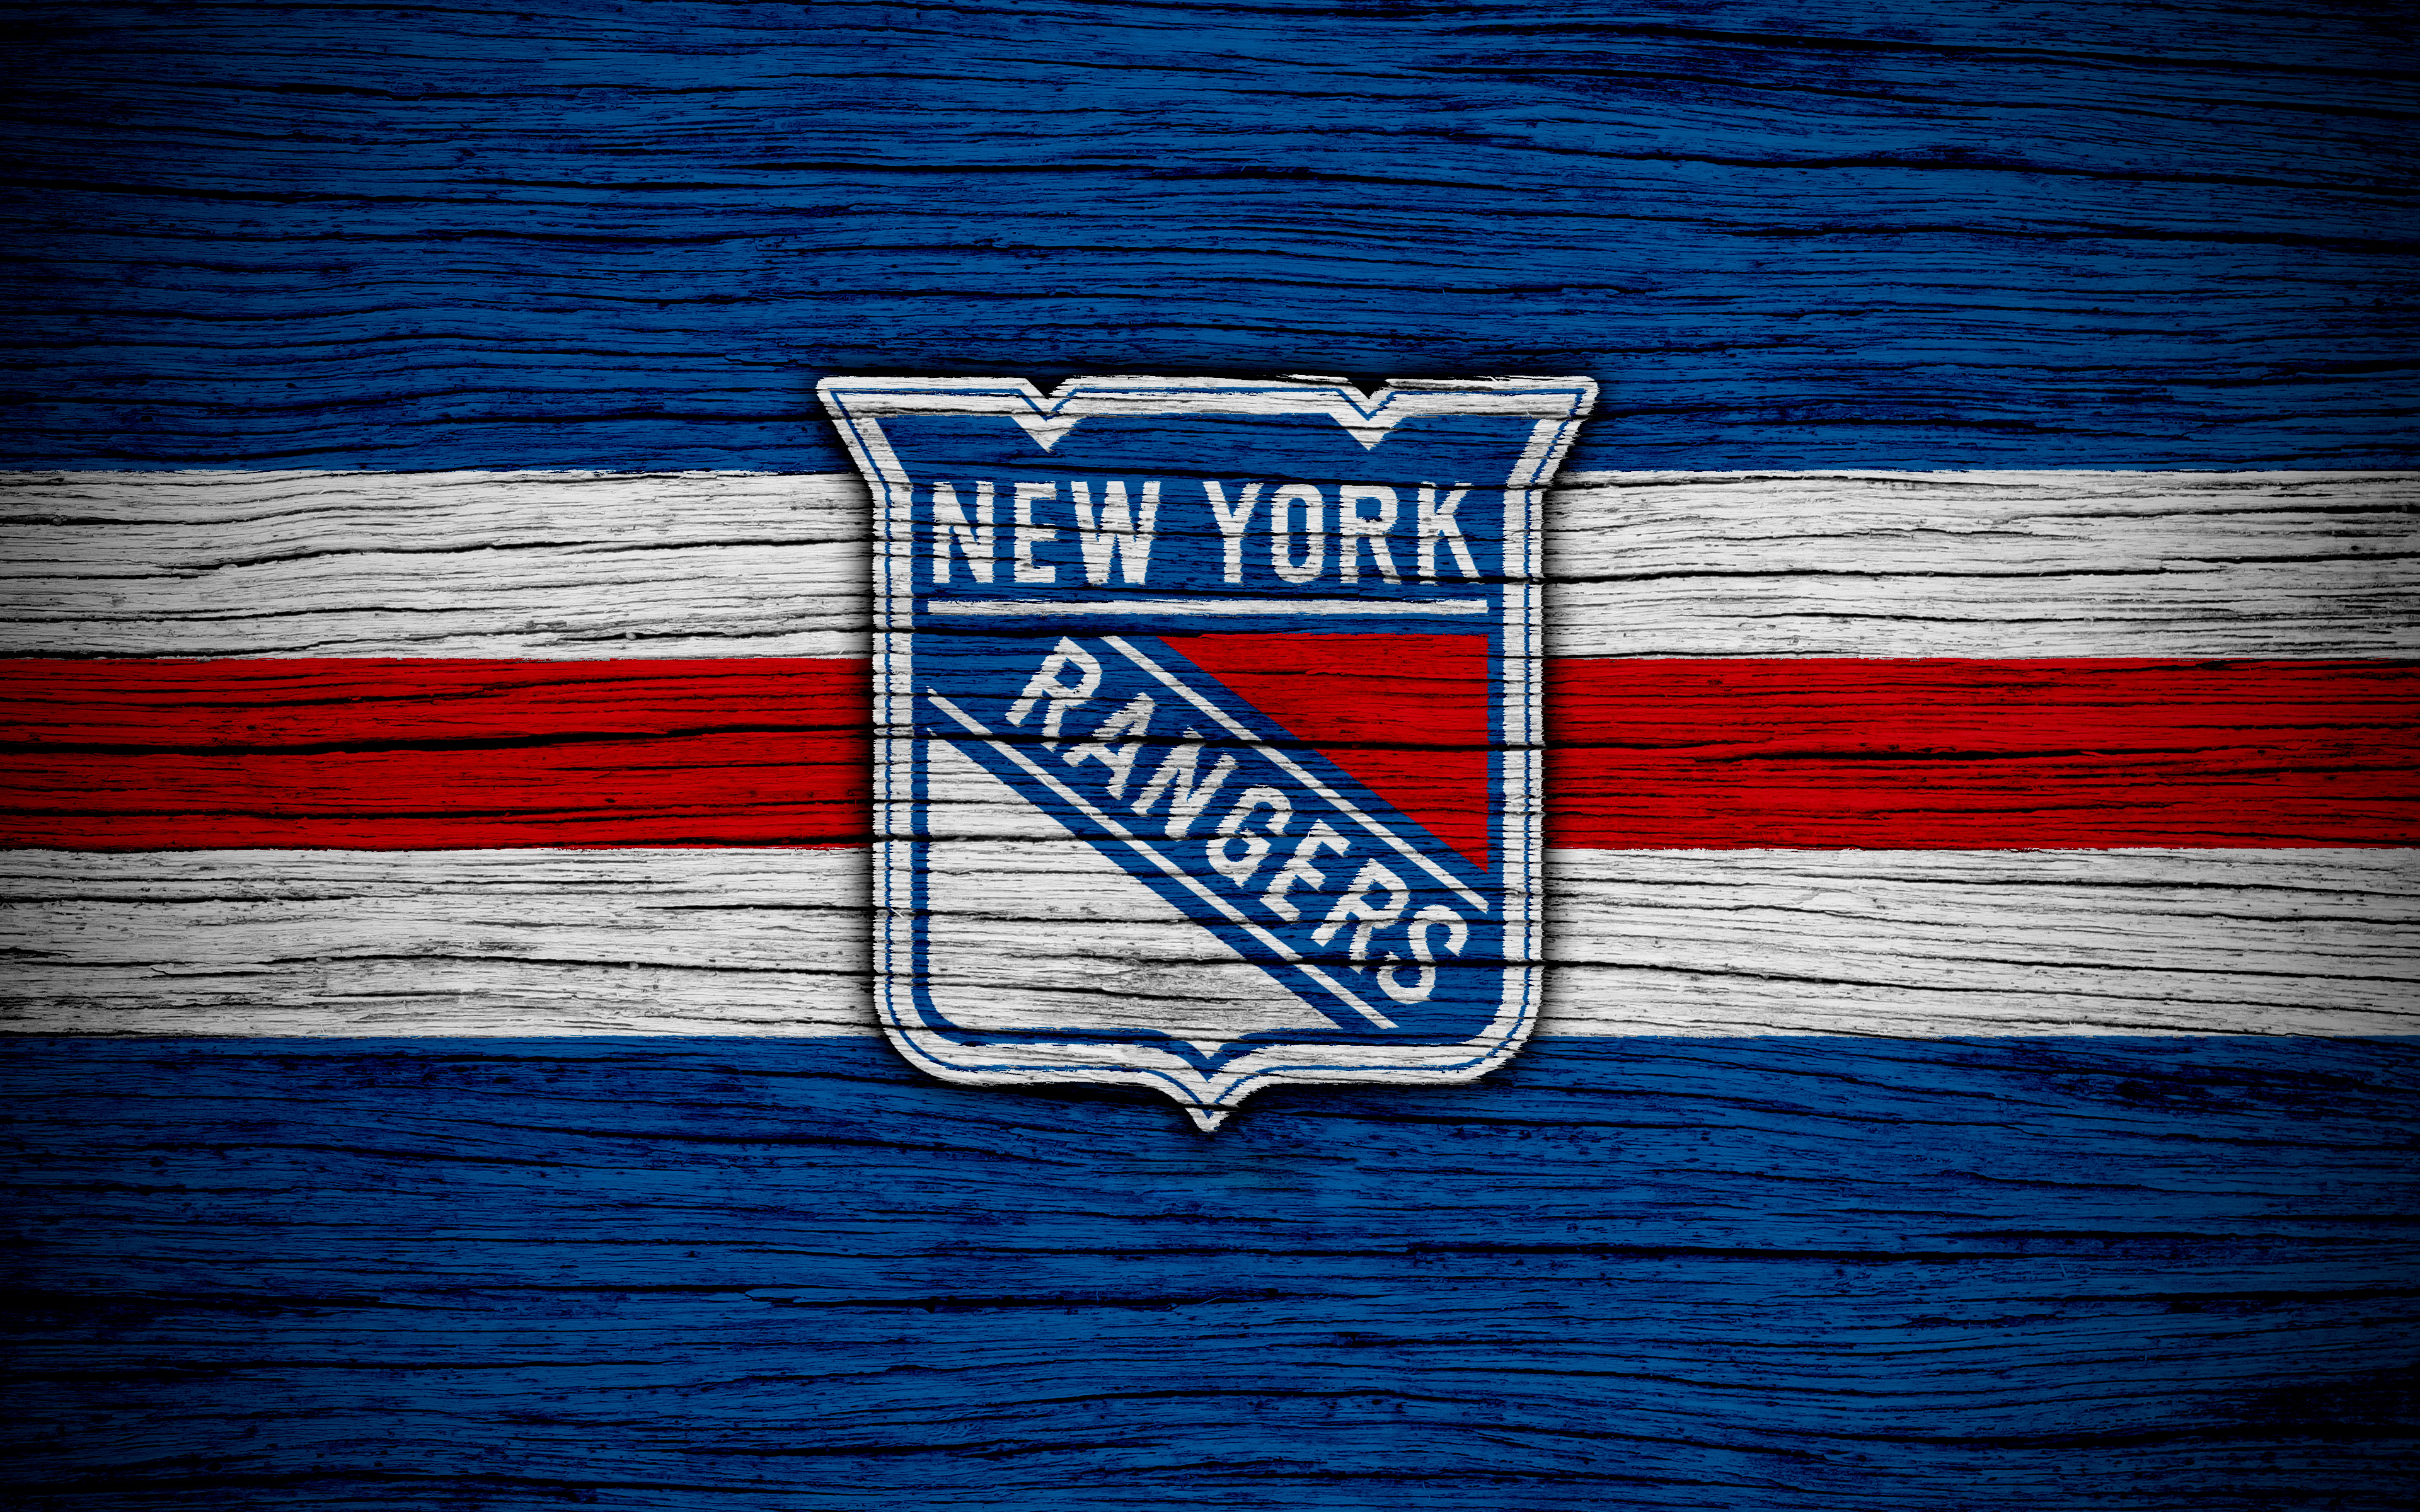 New York Rangers 4k Ultra HD Wallpaper Background Image